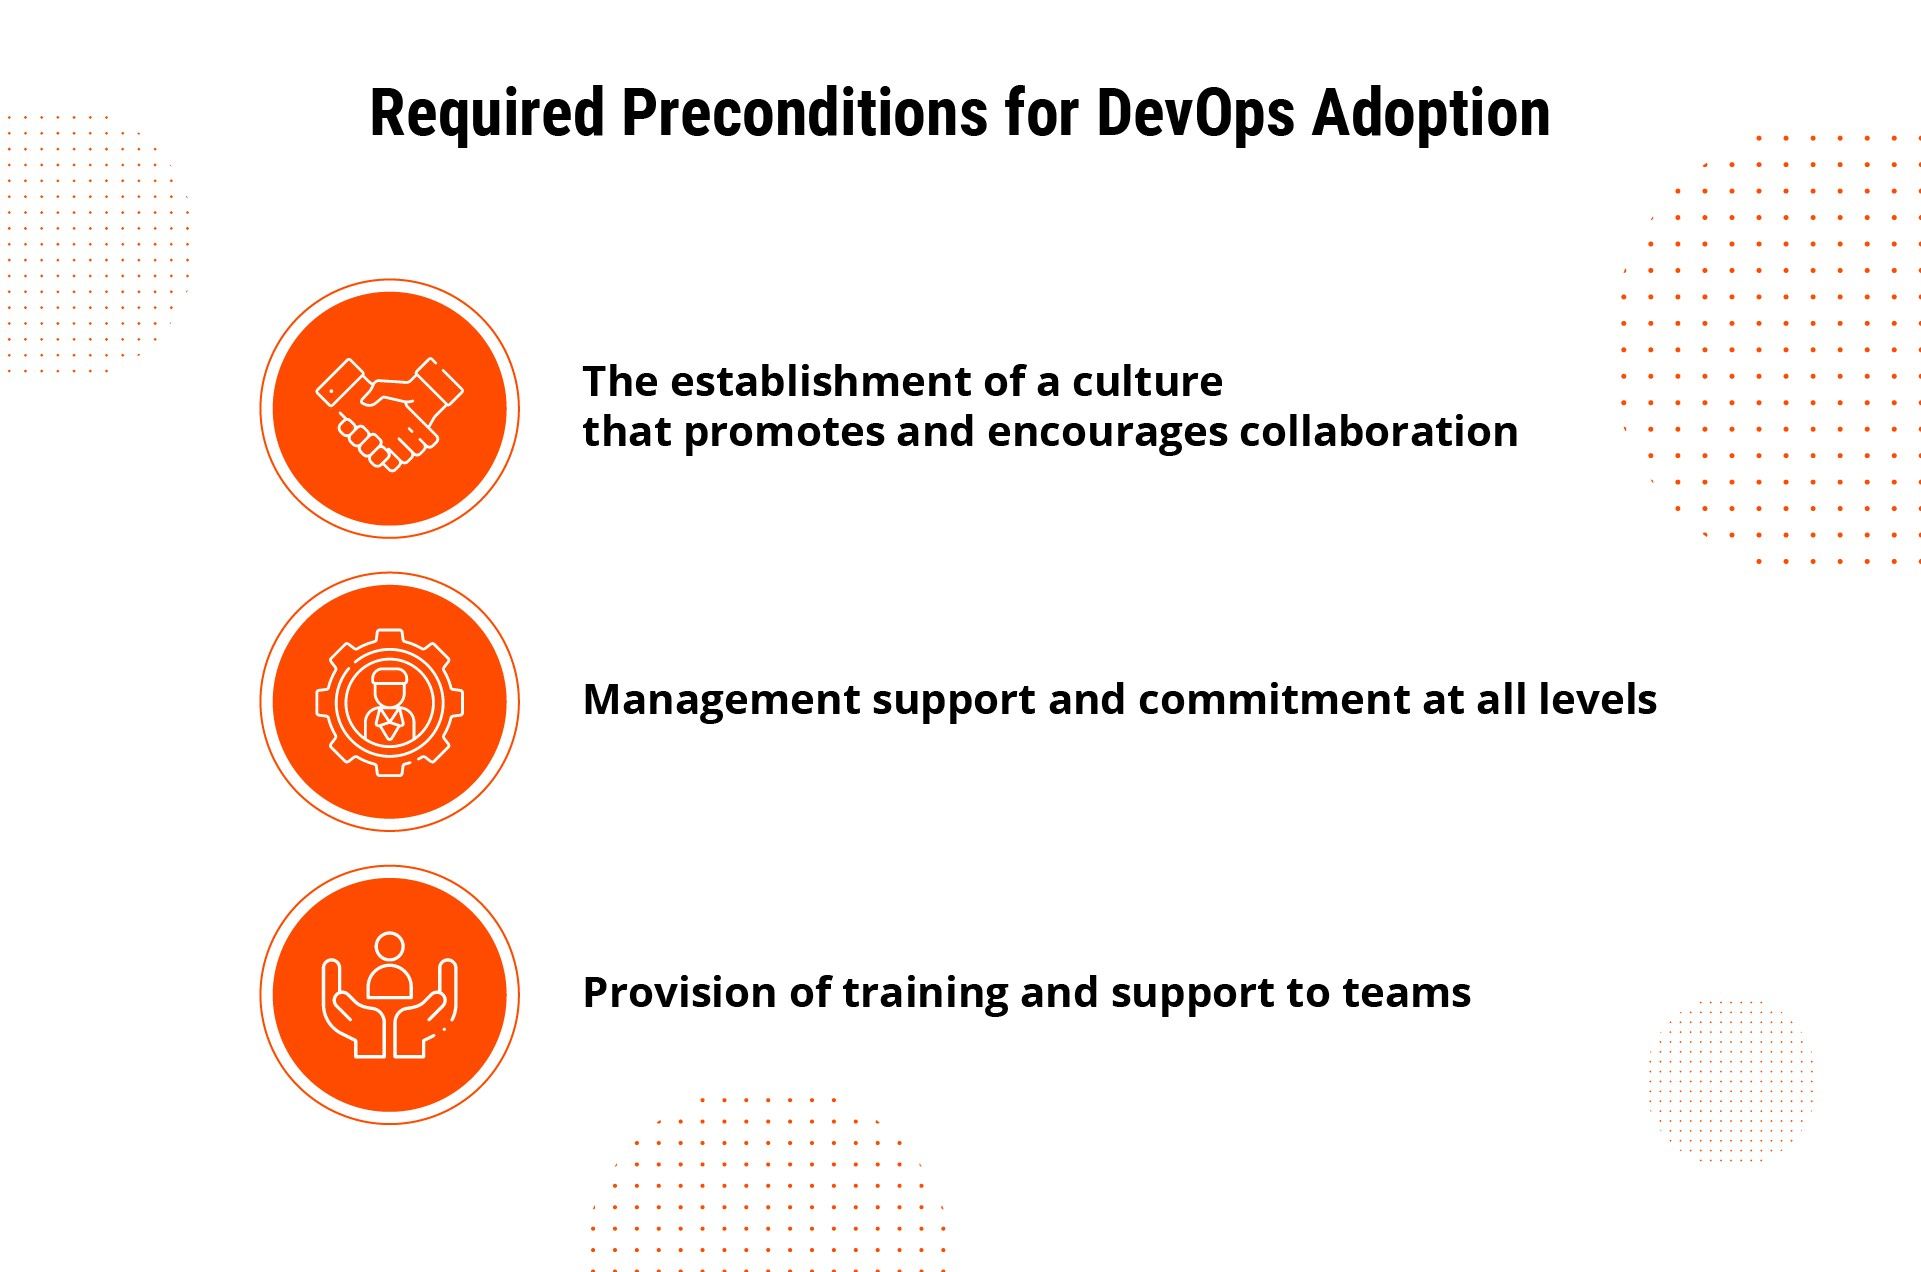 preconditions for DevOps adoption